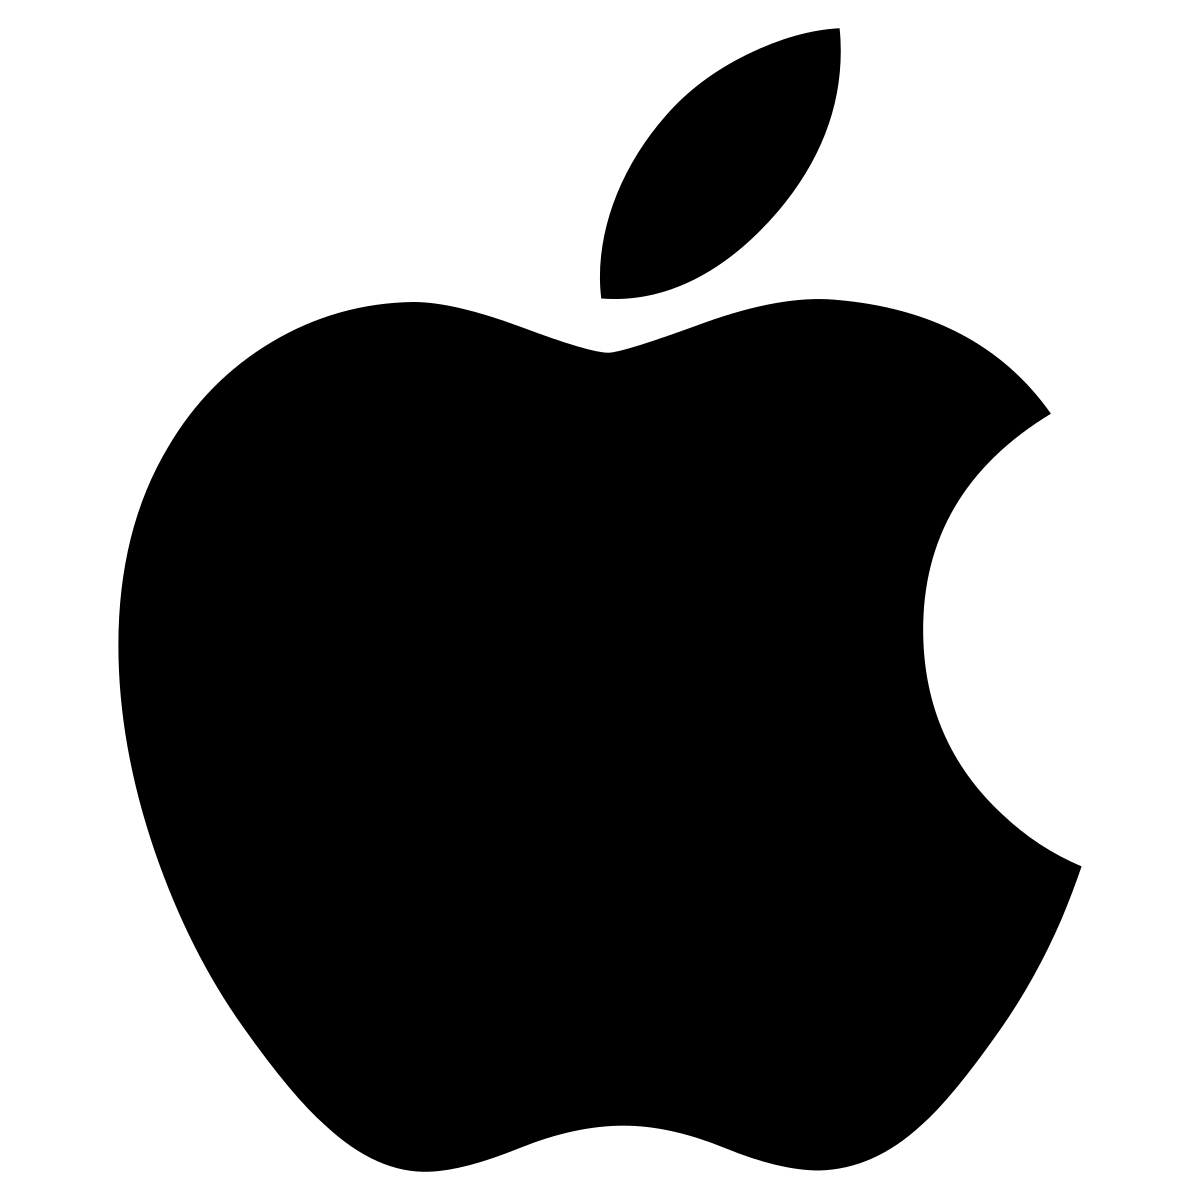 Original Apple Logo - History of Apple Inc.